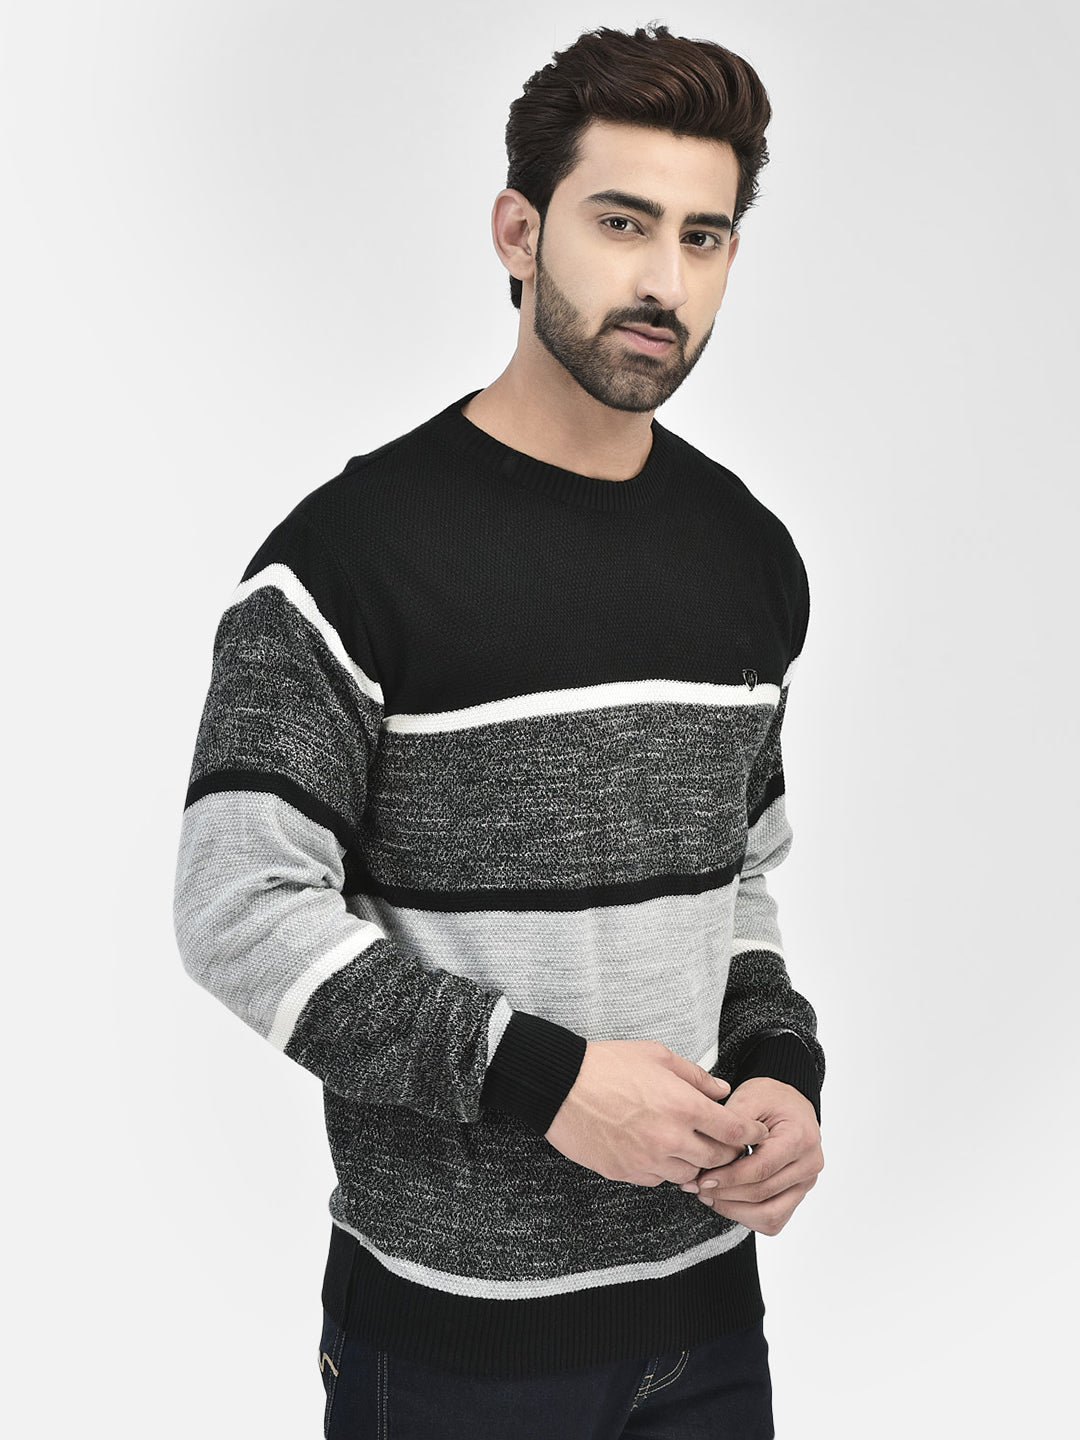 Black Colourblocked Sweaters.